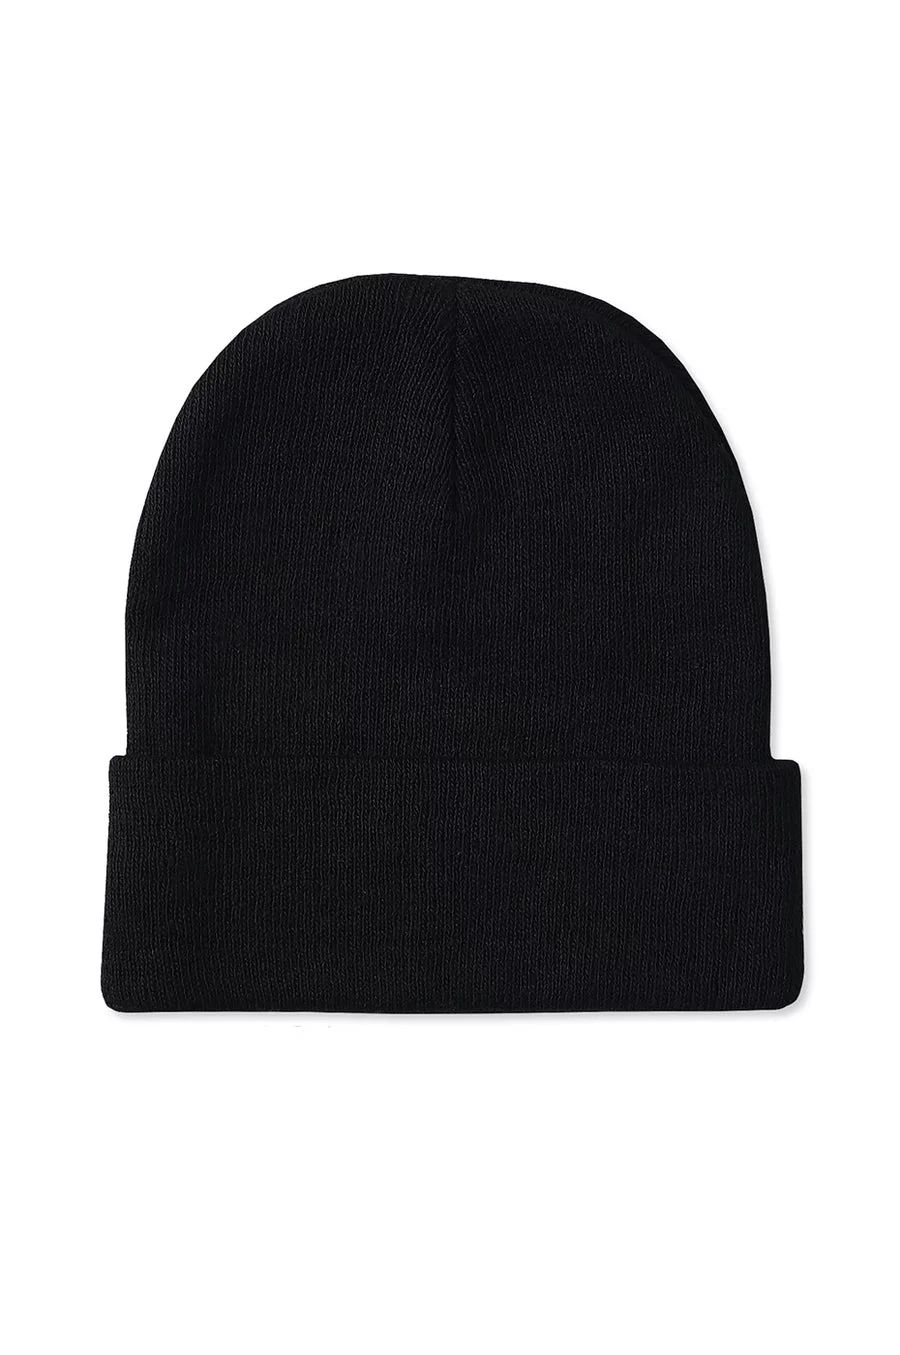 10" Skull Cap Winter Beanie Knit Hats for Men & Women - 1 Black | Walmart (US)